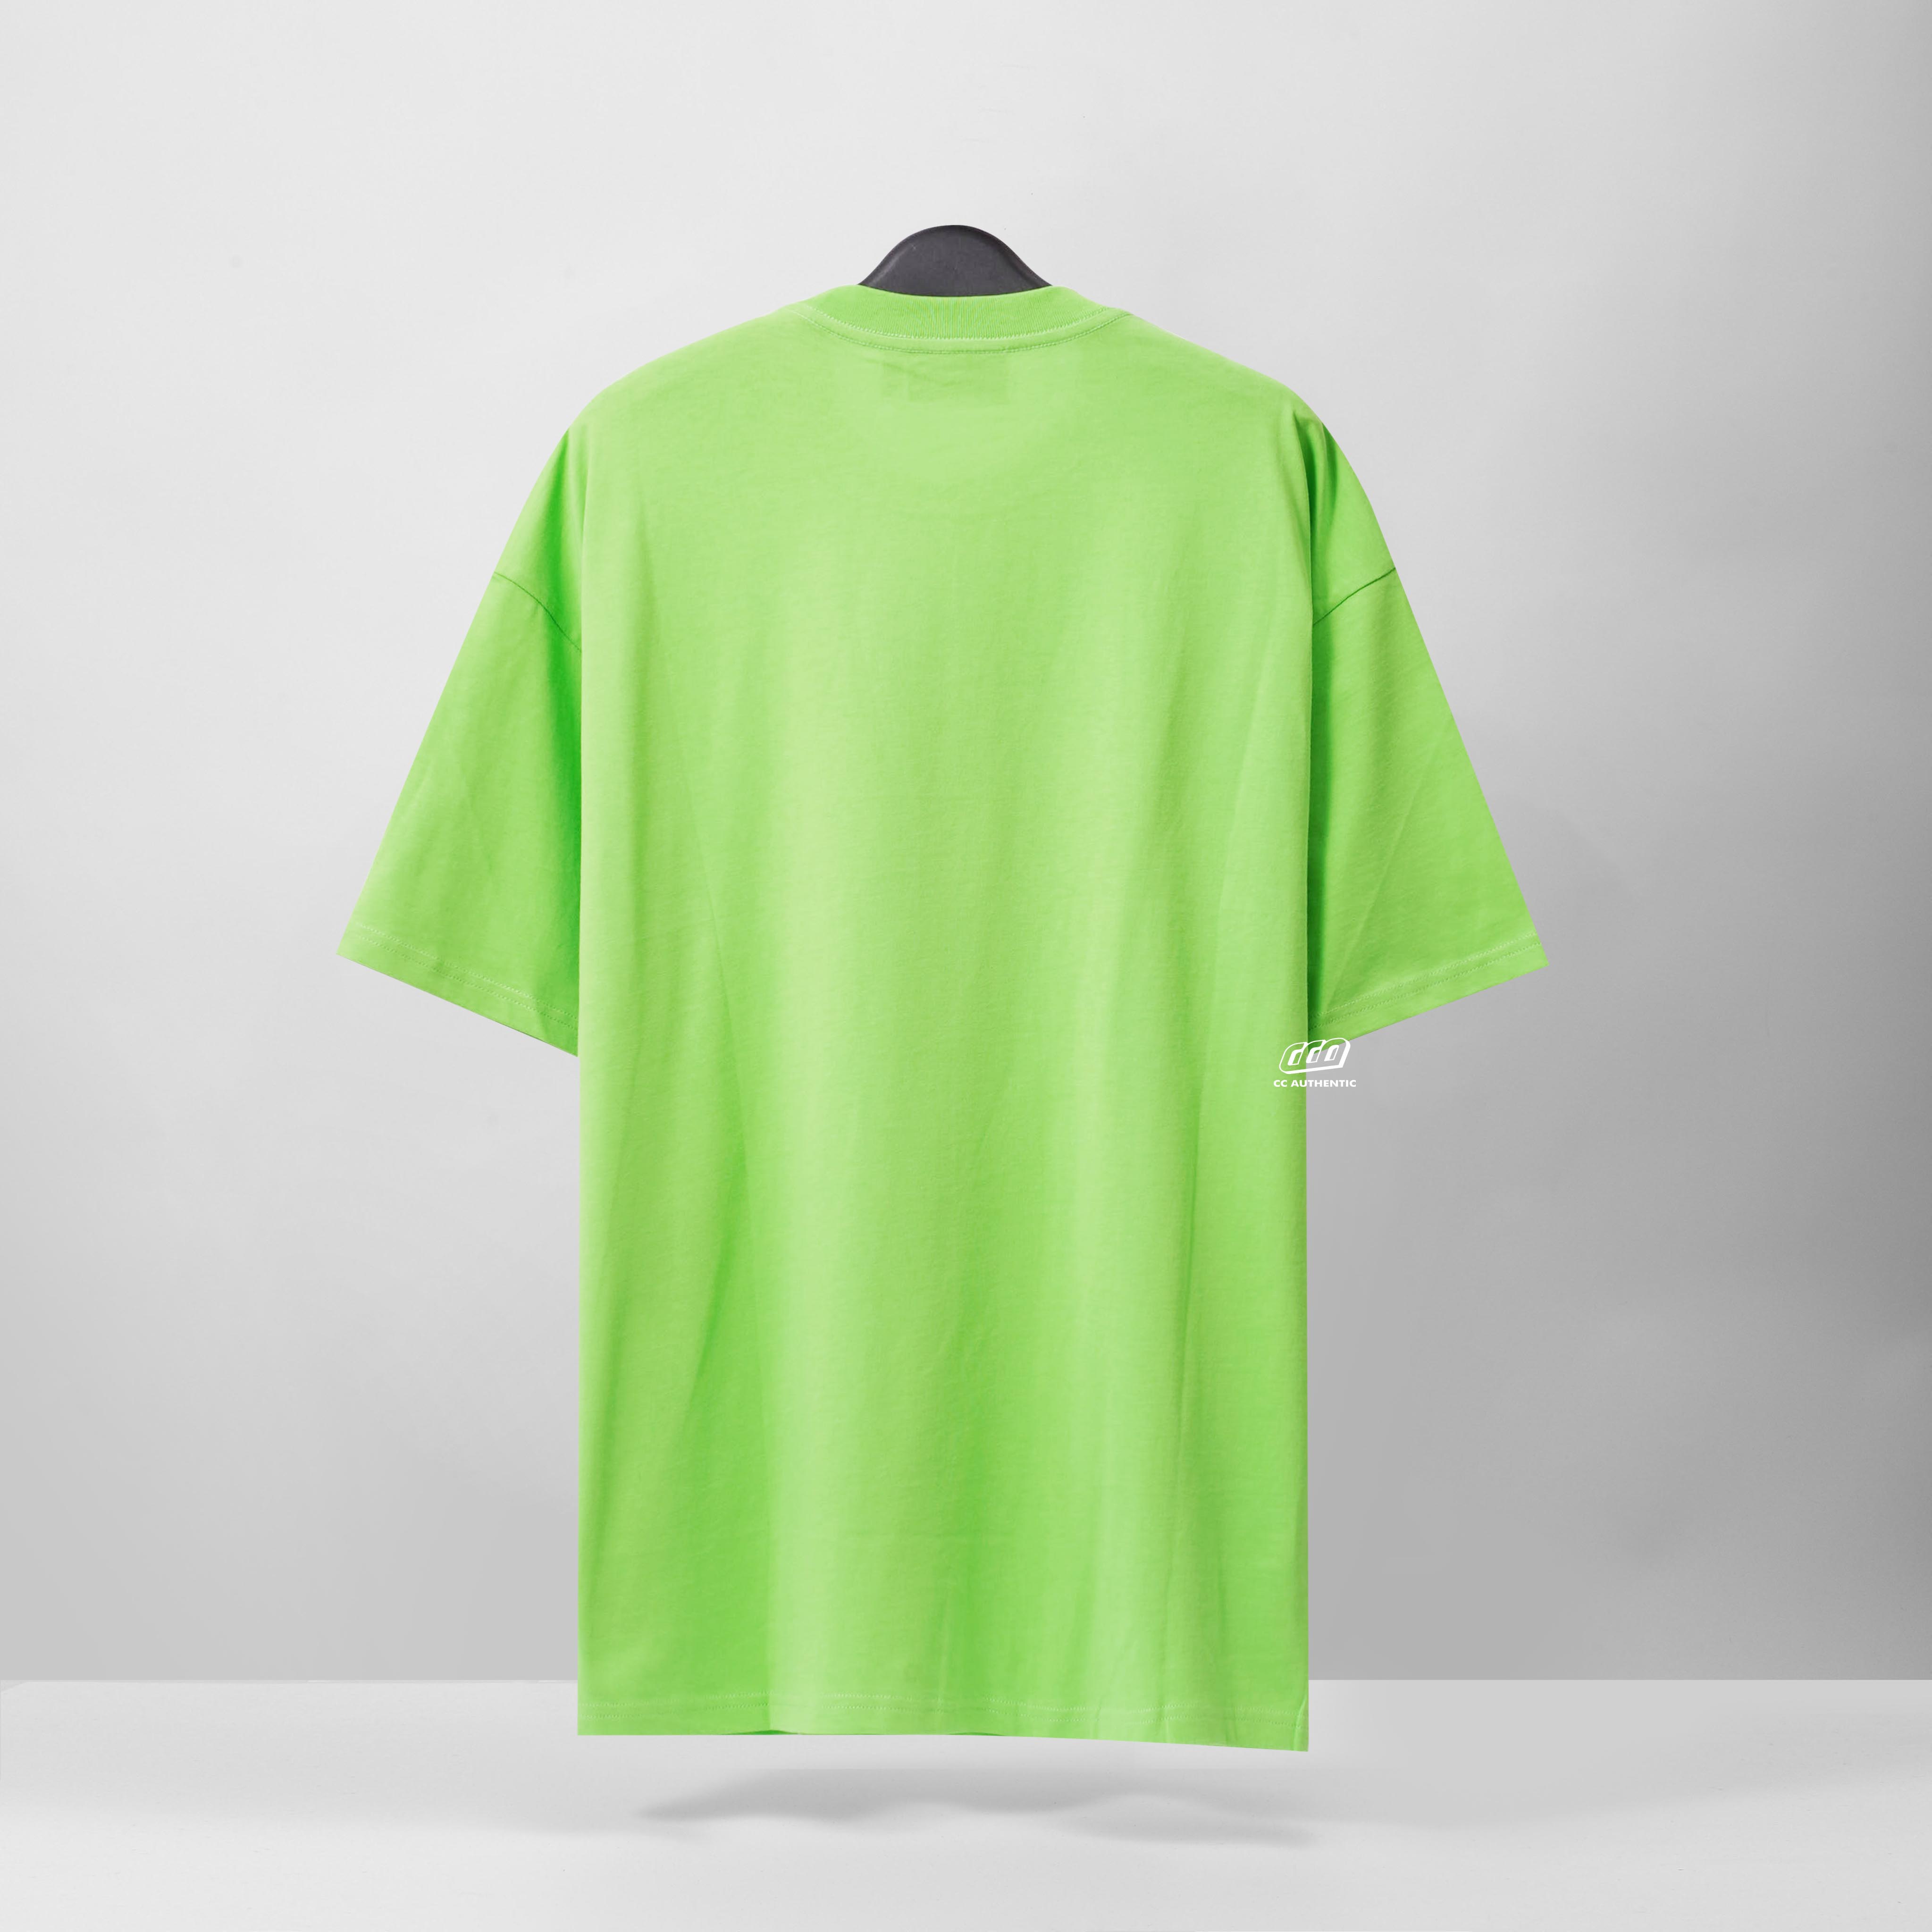 Drew House Mascot SS T-shirt - Lime